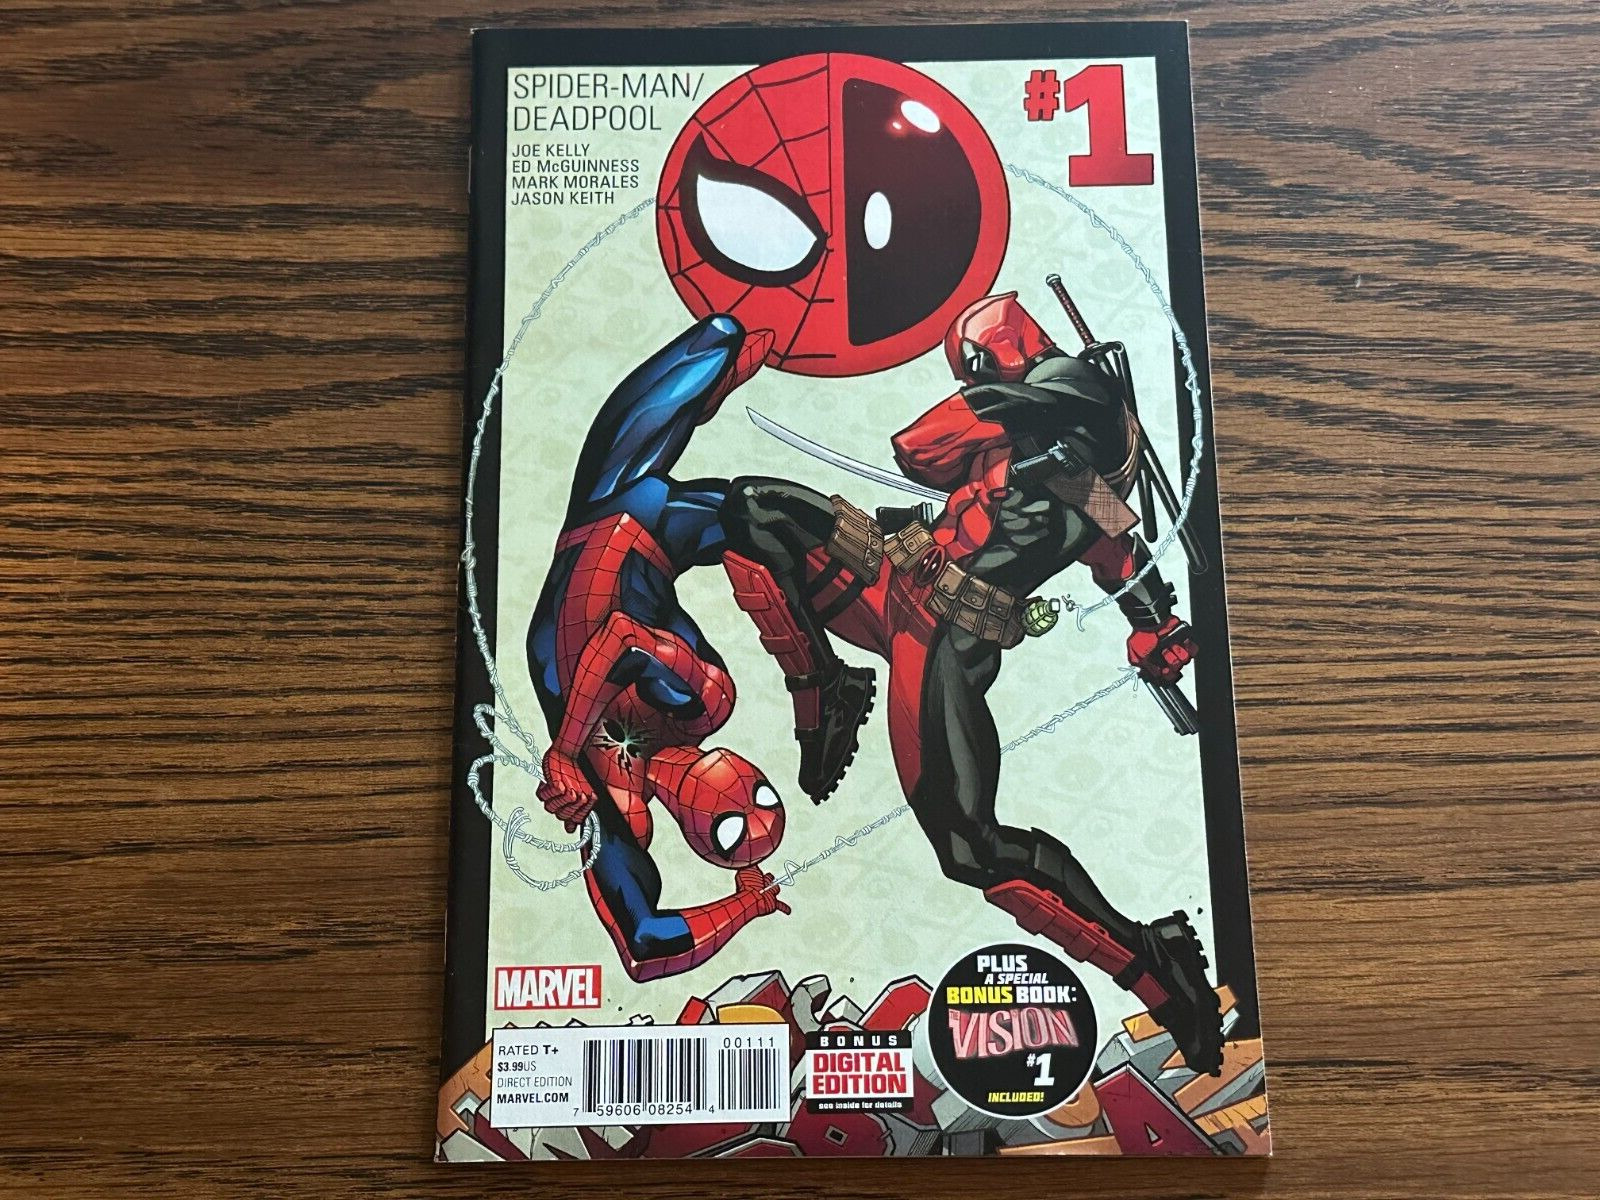 Spider-Man Deadpool #1 - Marvel Comics 2016 1st printing Ed McGuinness cover